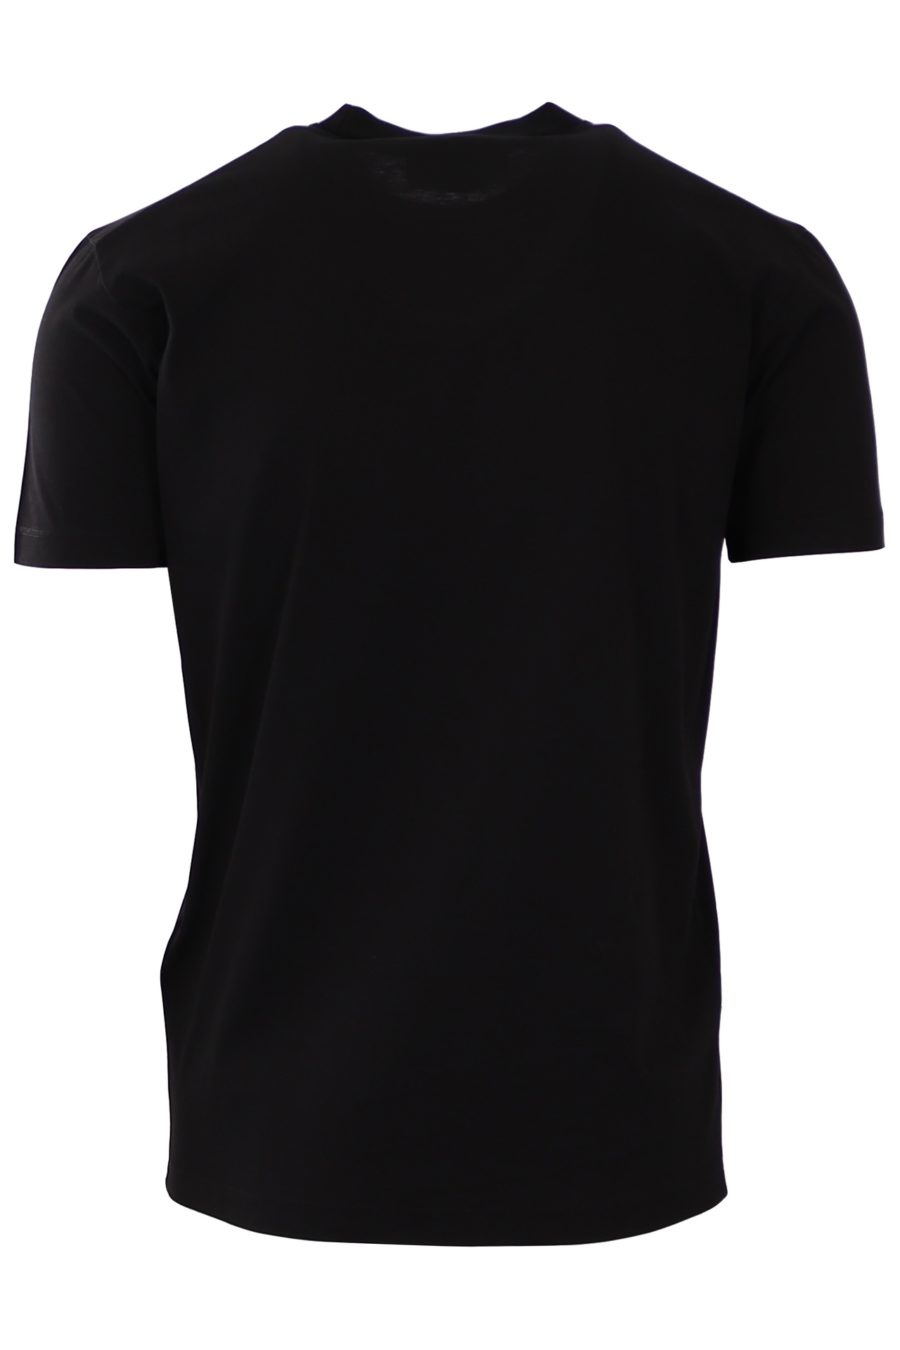 Camiseta Dsquared2 negra logo blanco made in italy - 9d1348fa2025500e50d541ad8989c1a9145b8d92